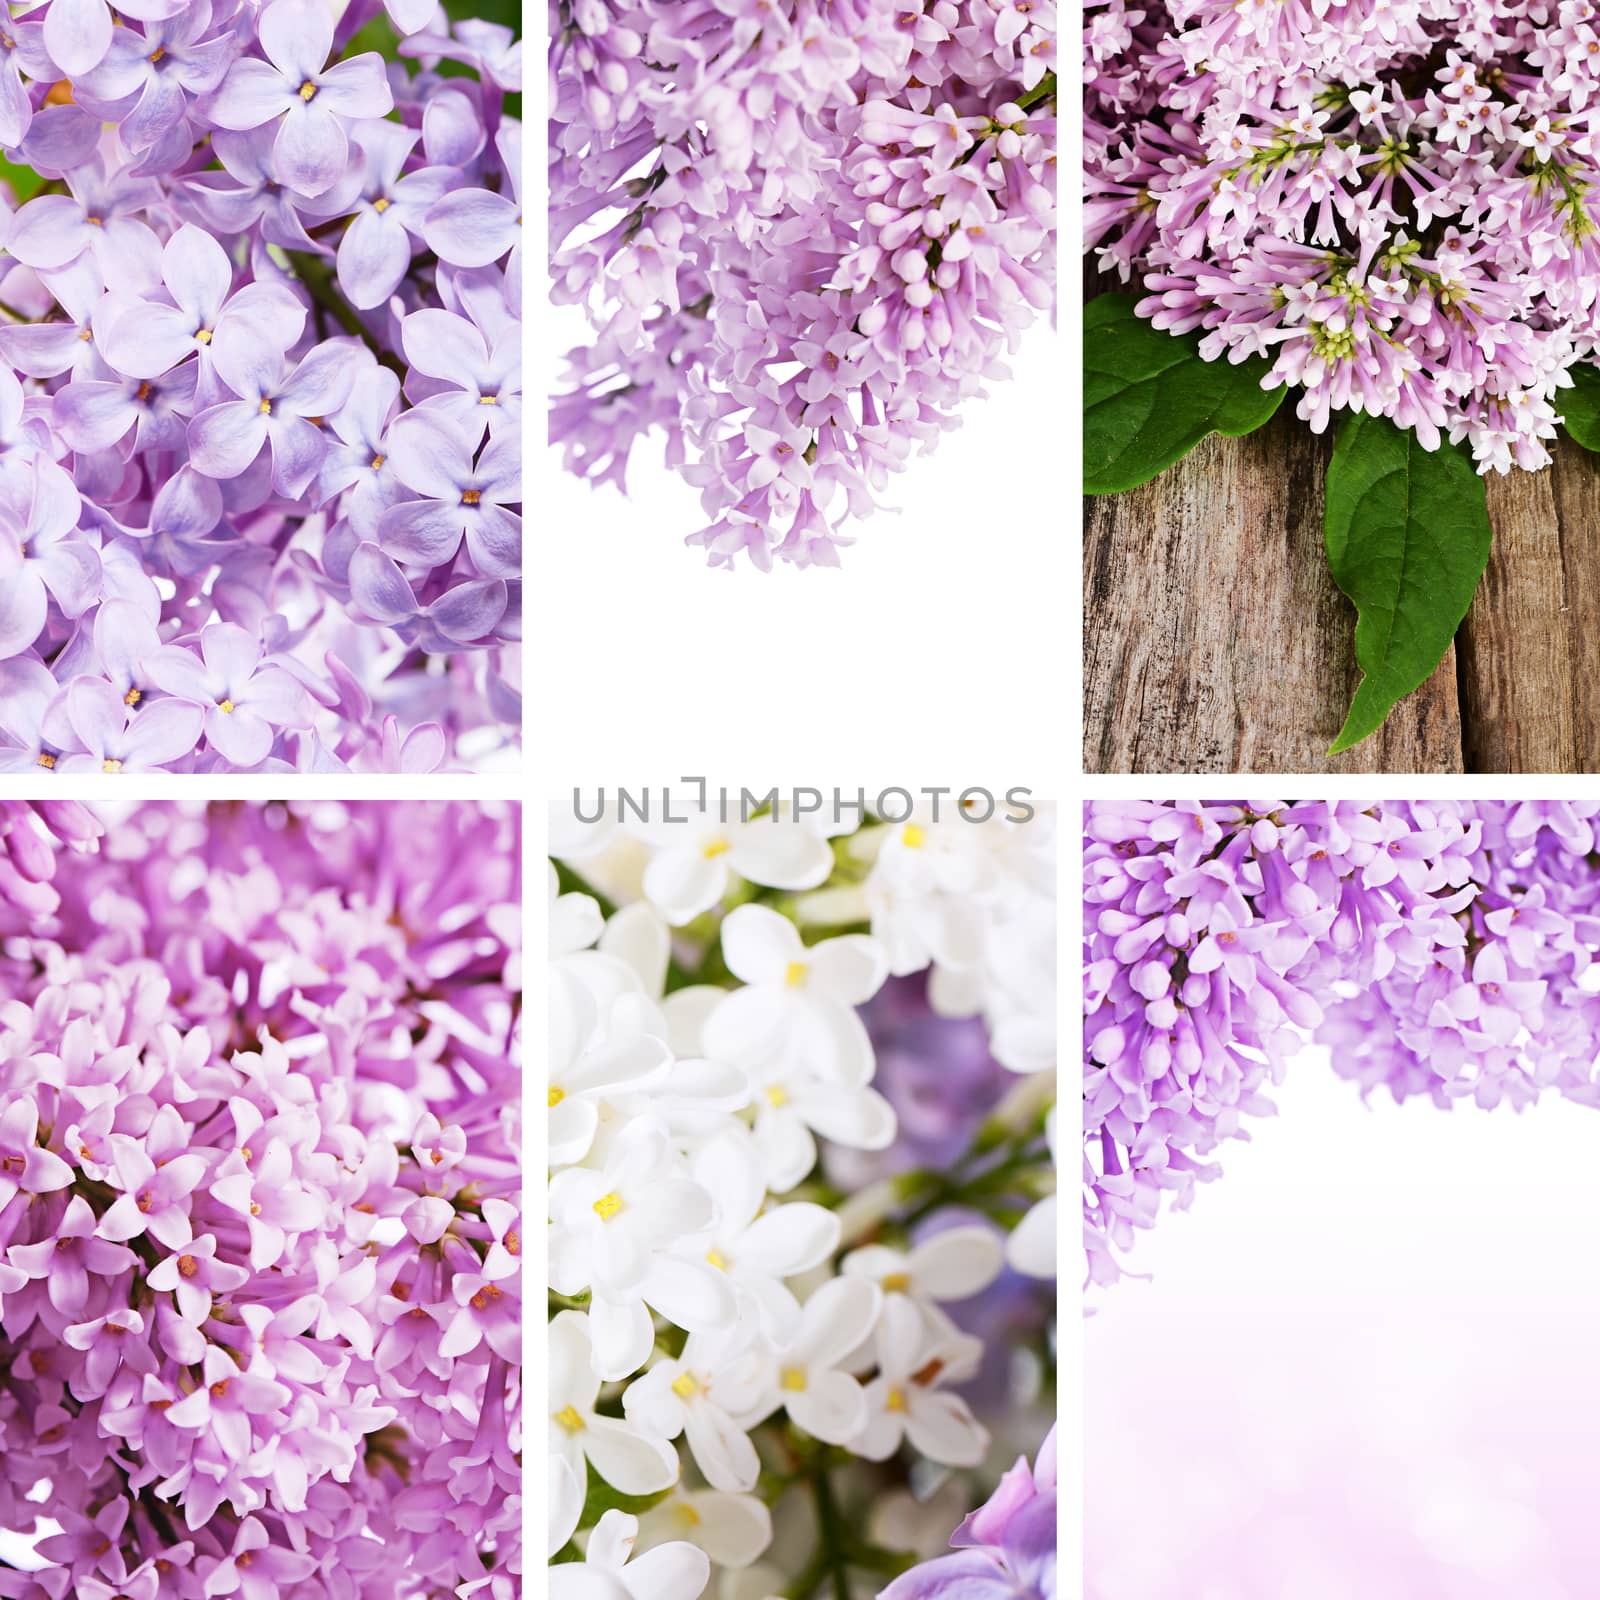 Lilac close up as a background by SvetaVo